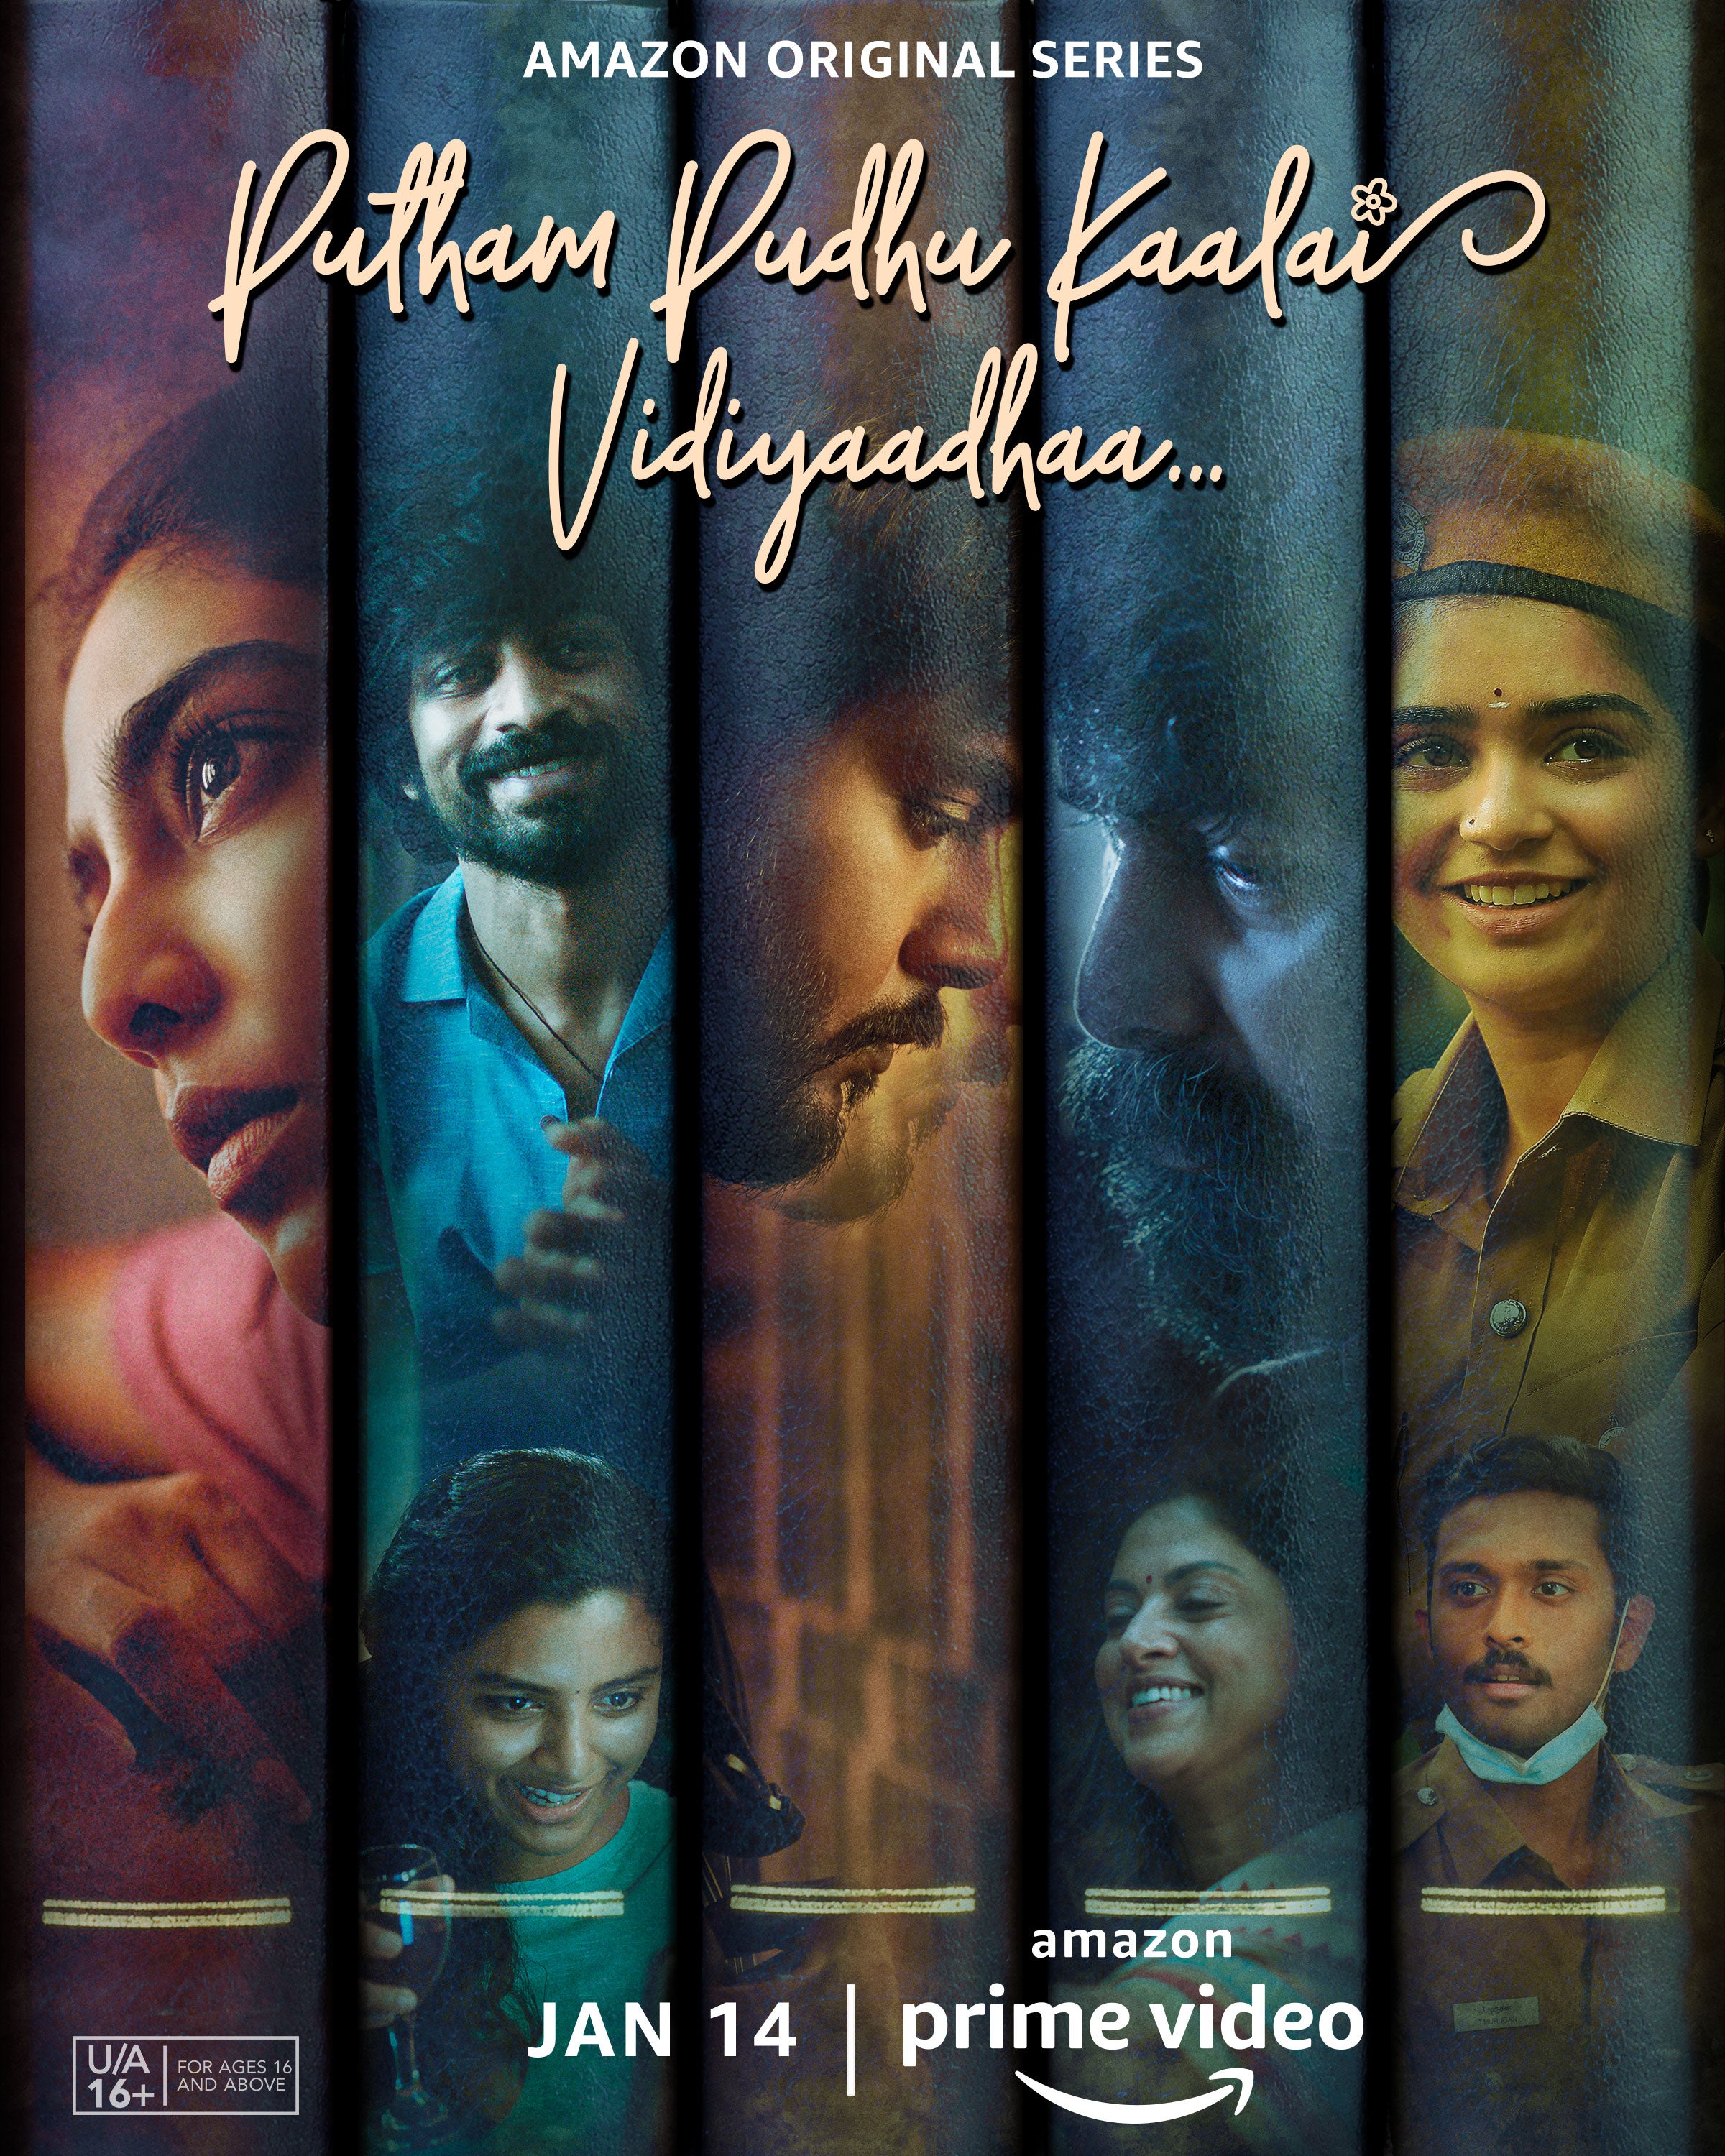 TV ratings for Putham Pudhu Kaalai Vidiyaadhaa in Turquía. Amazon Prime Video TV series